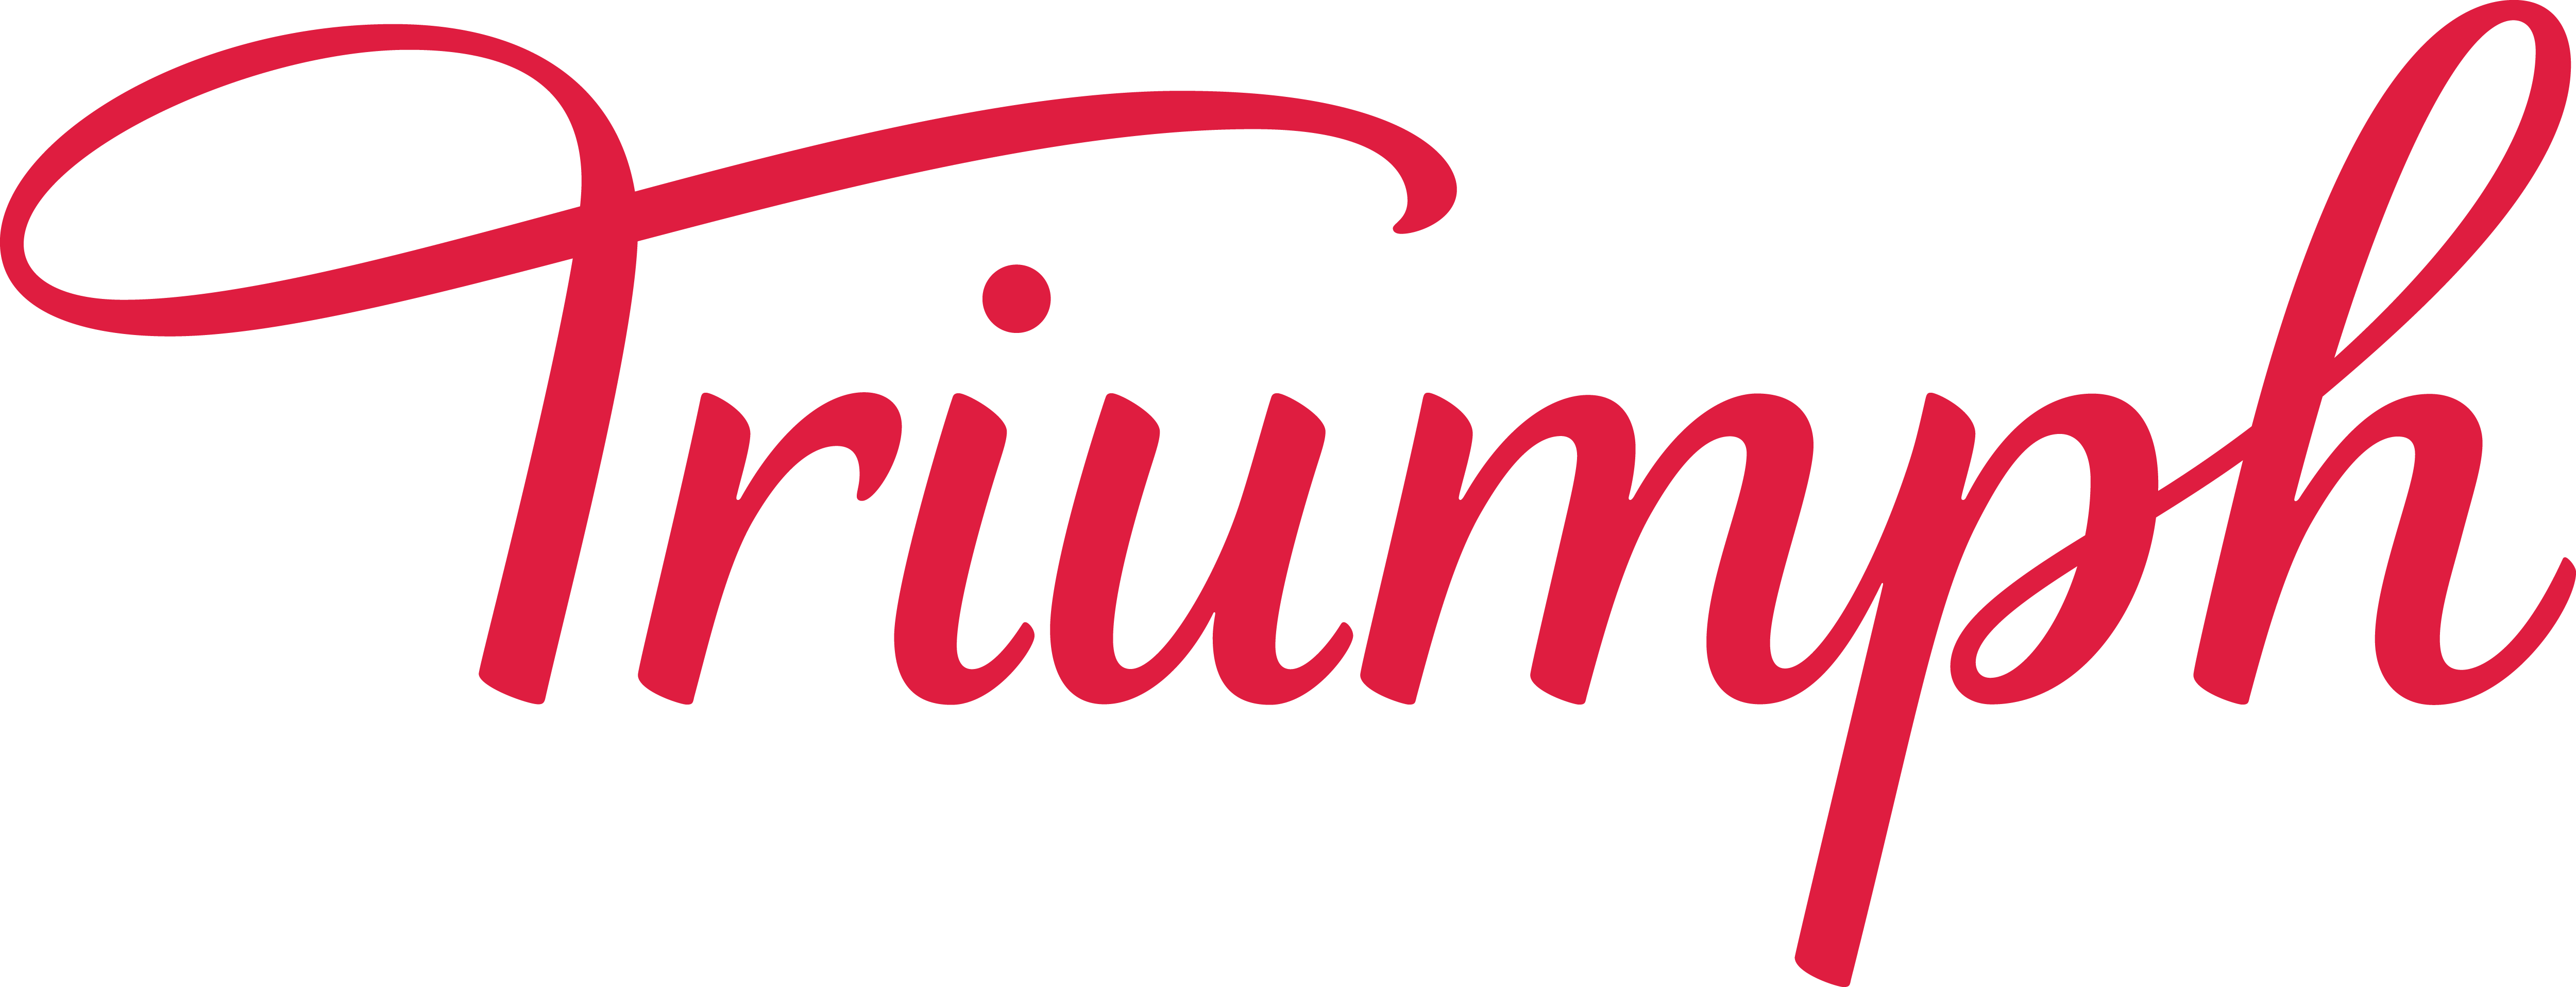 NEW Triumph logo PMS RED3